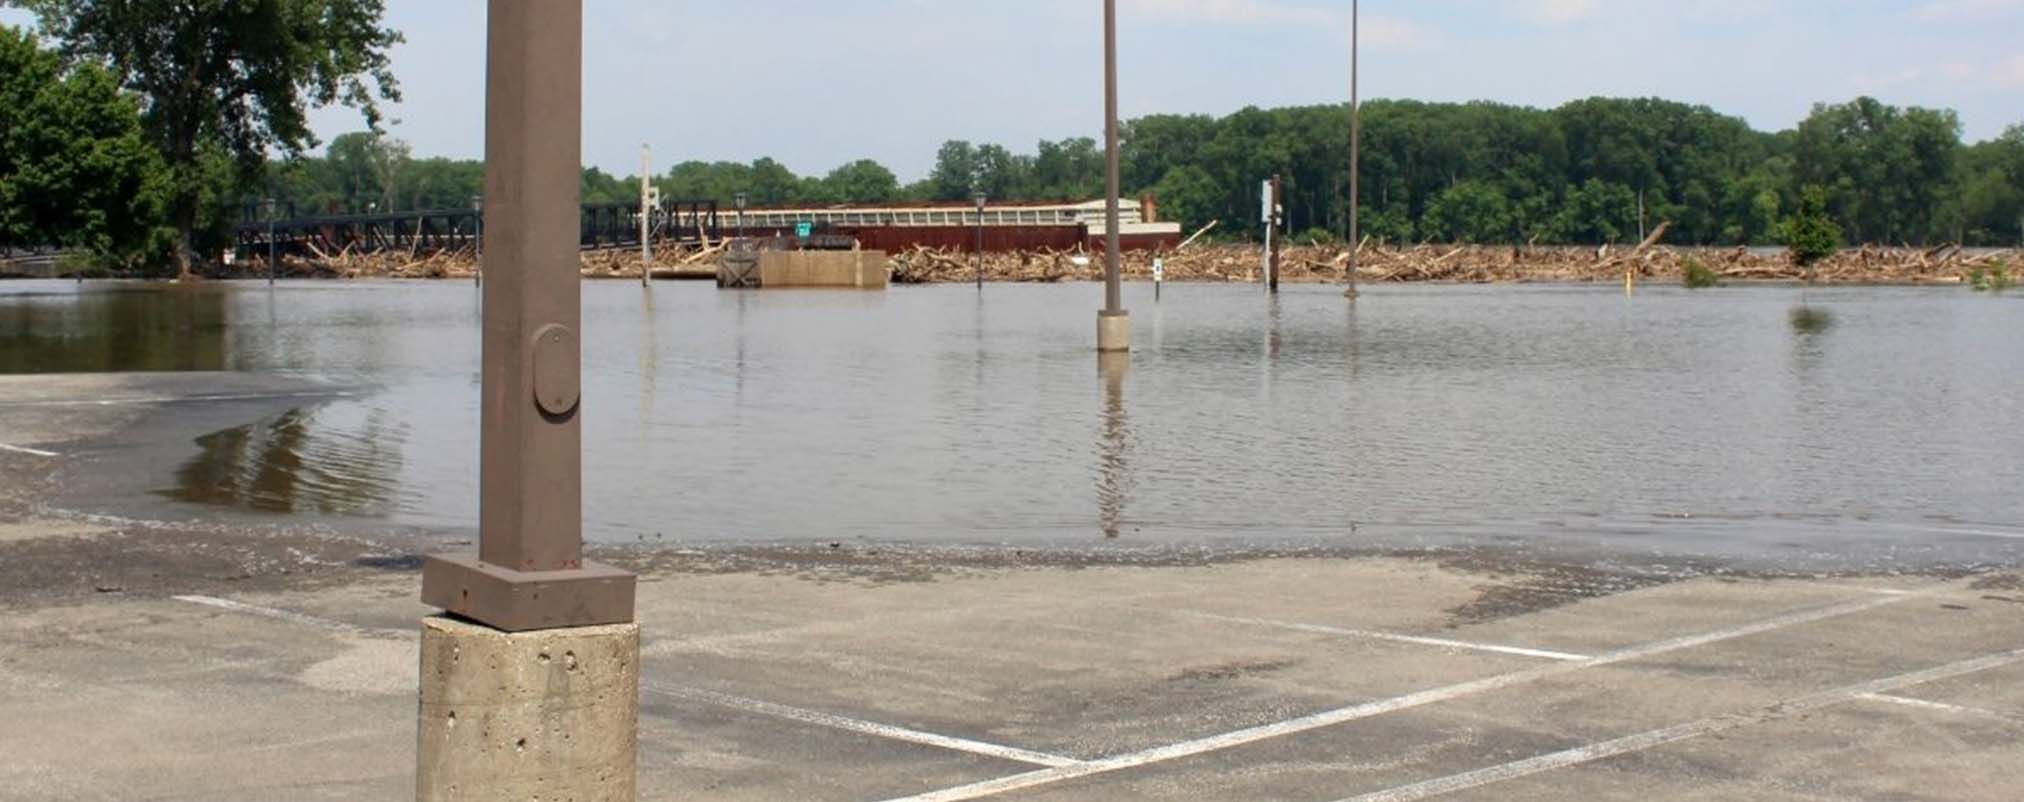 Flooded Parking Lot Remediation